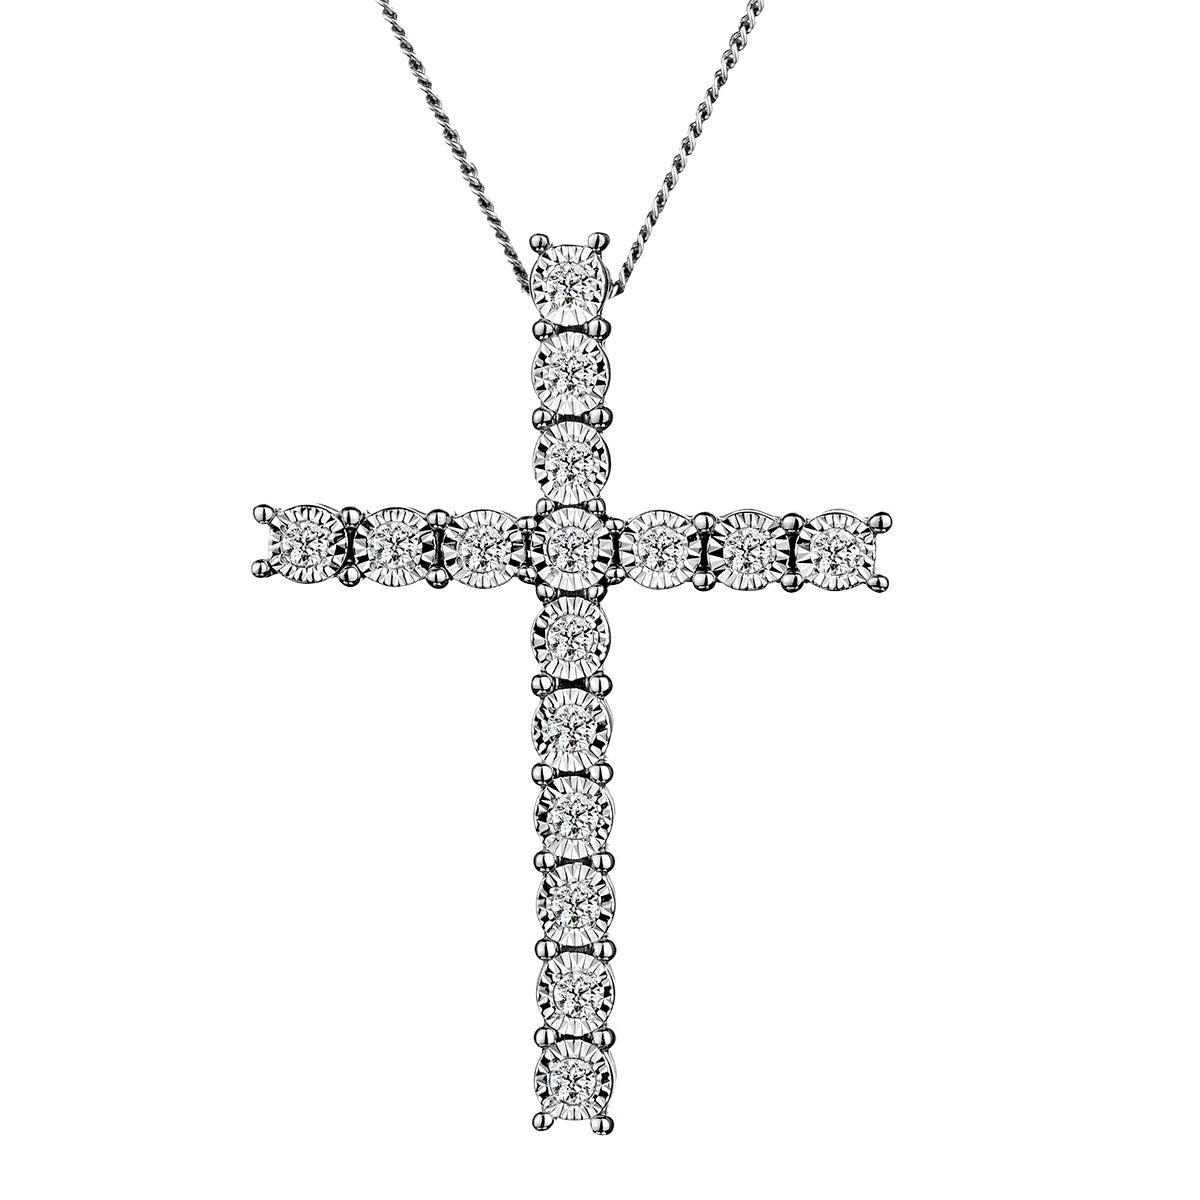 .15 Carat Diamond Cross Pendant,  10kt White Gold. Necklaces and Pendants. Griffin Jewellery Designs.